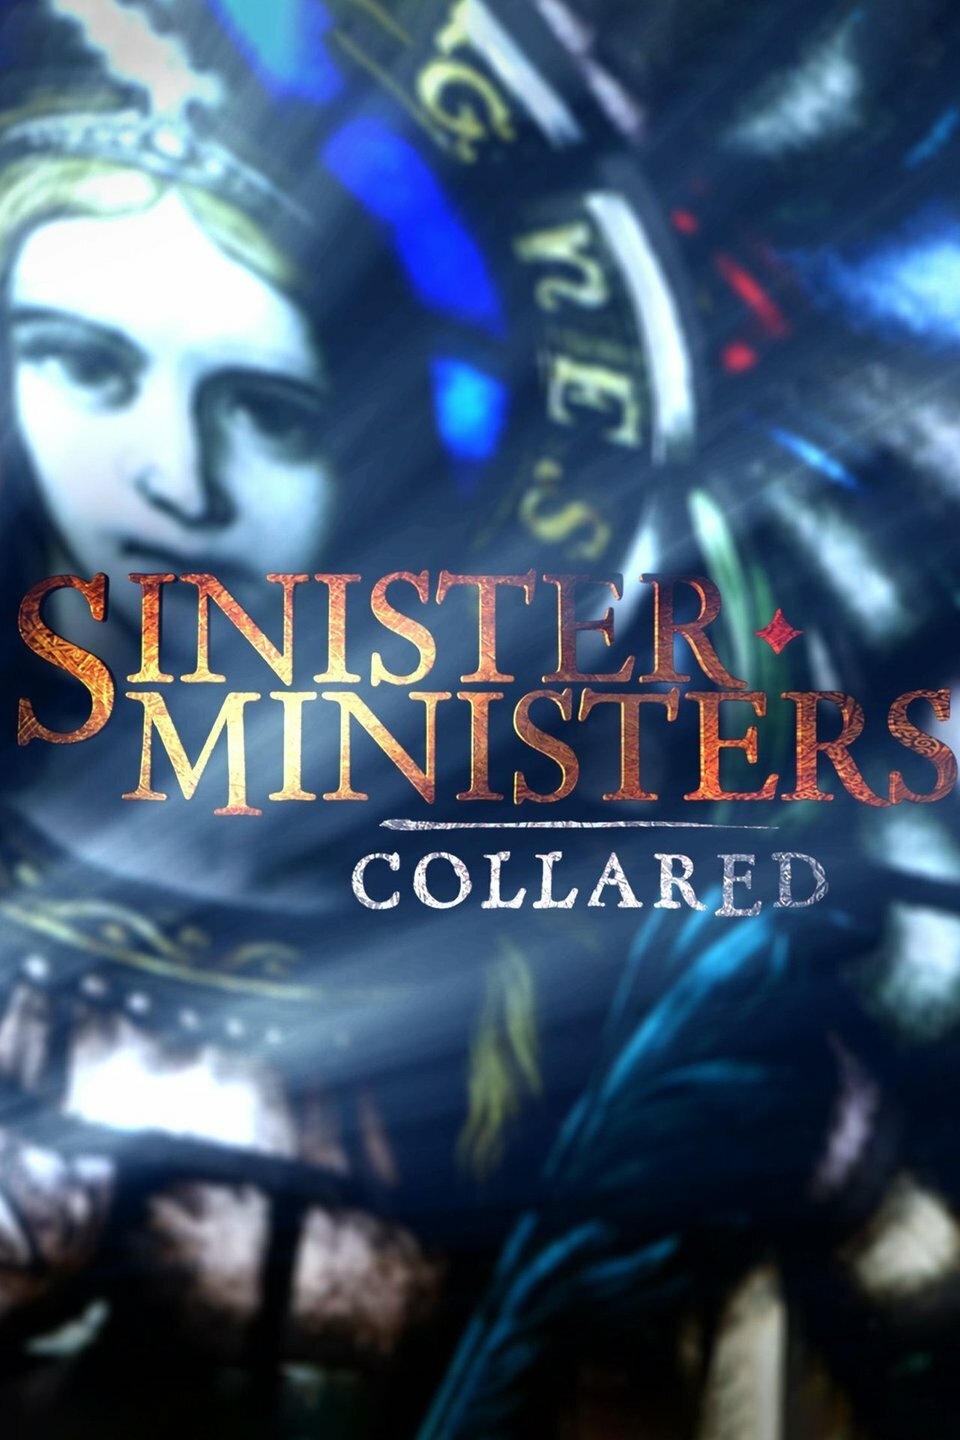 Sinister Ministers: Collared ne zaman